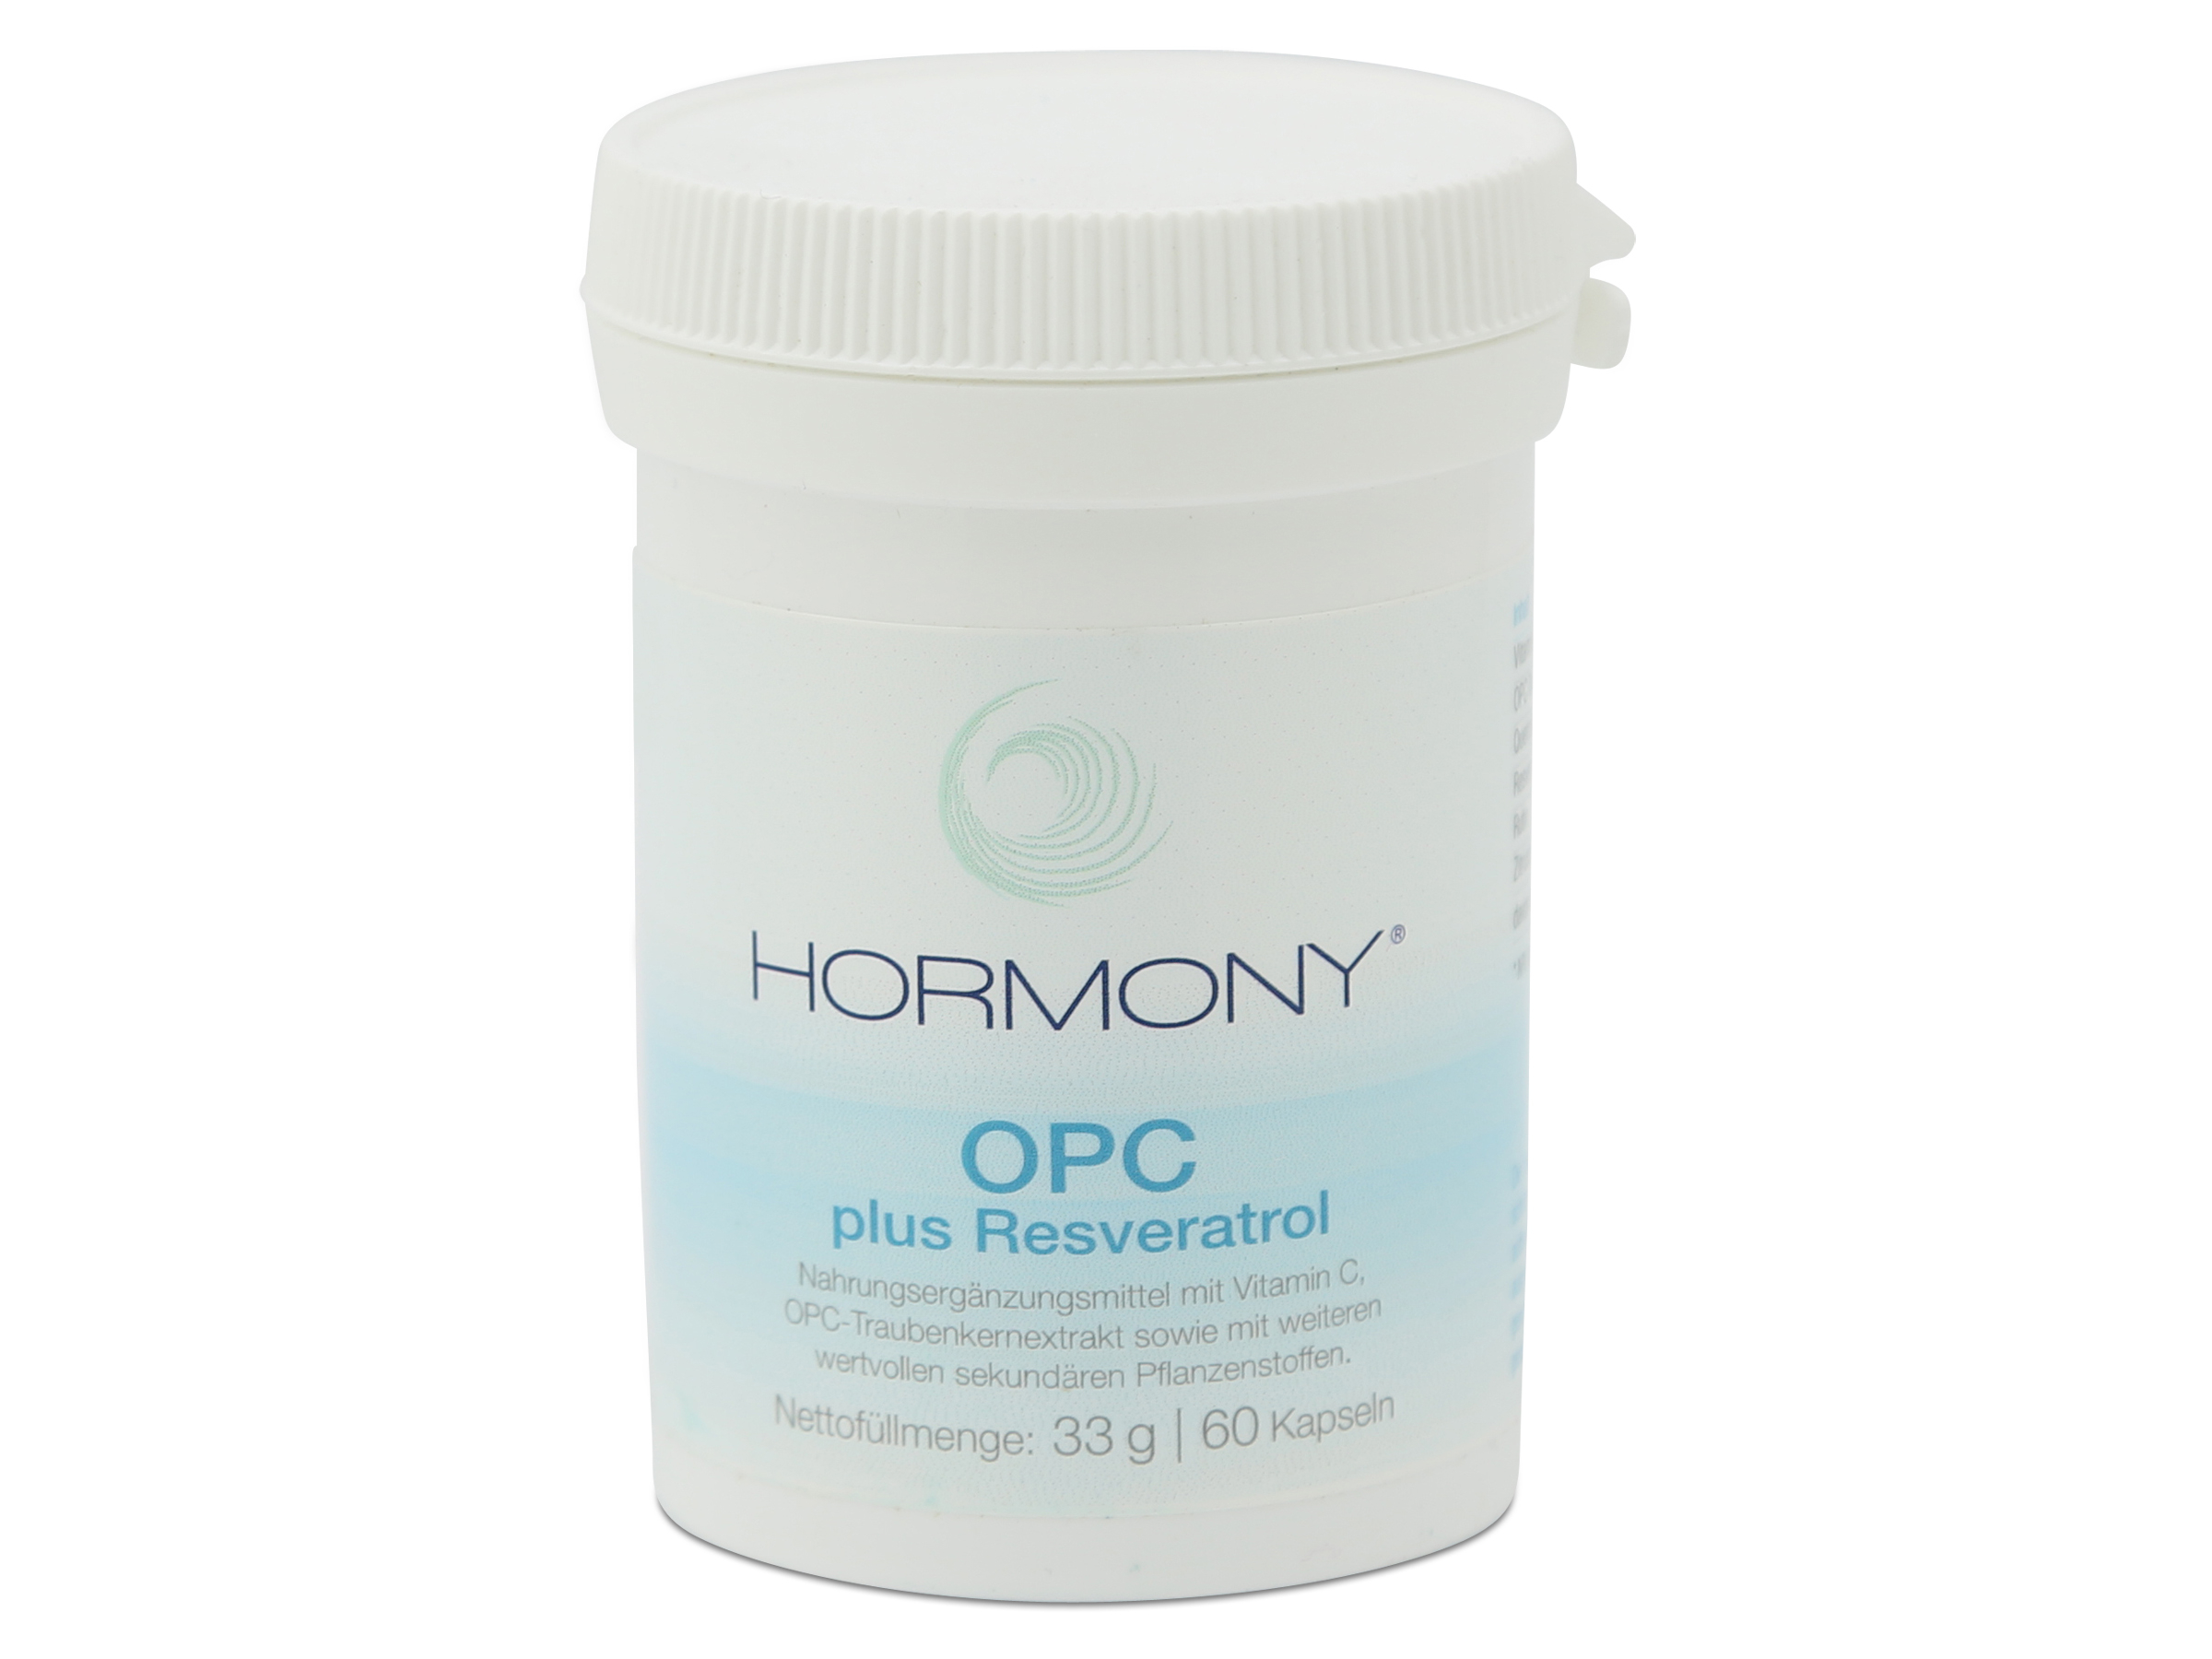 Hormony OPC plus Resveratrol | 60 Kapseln 33 g